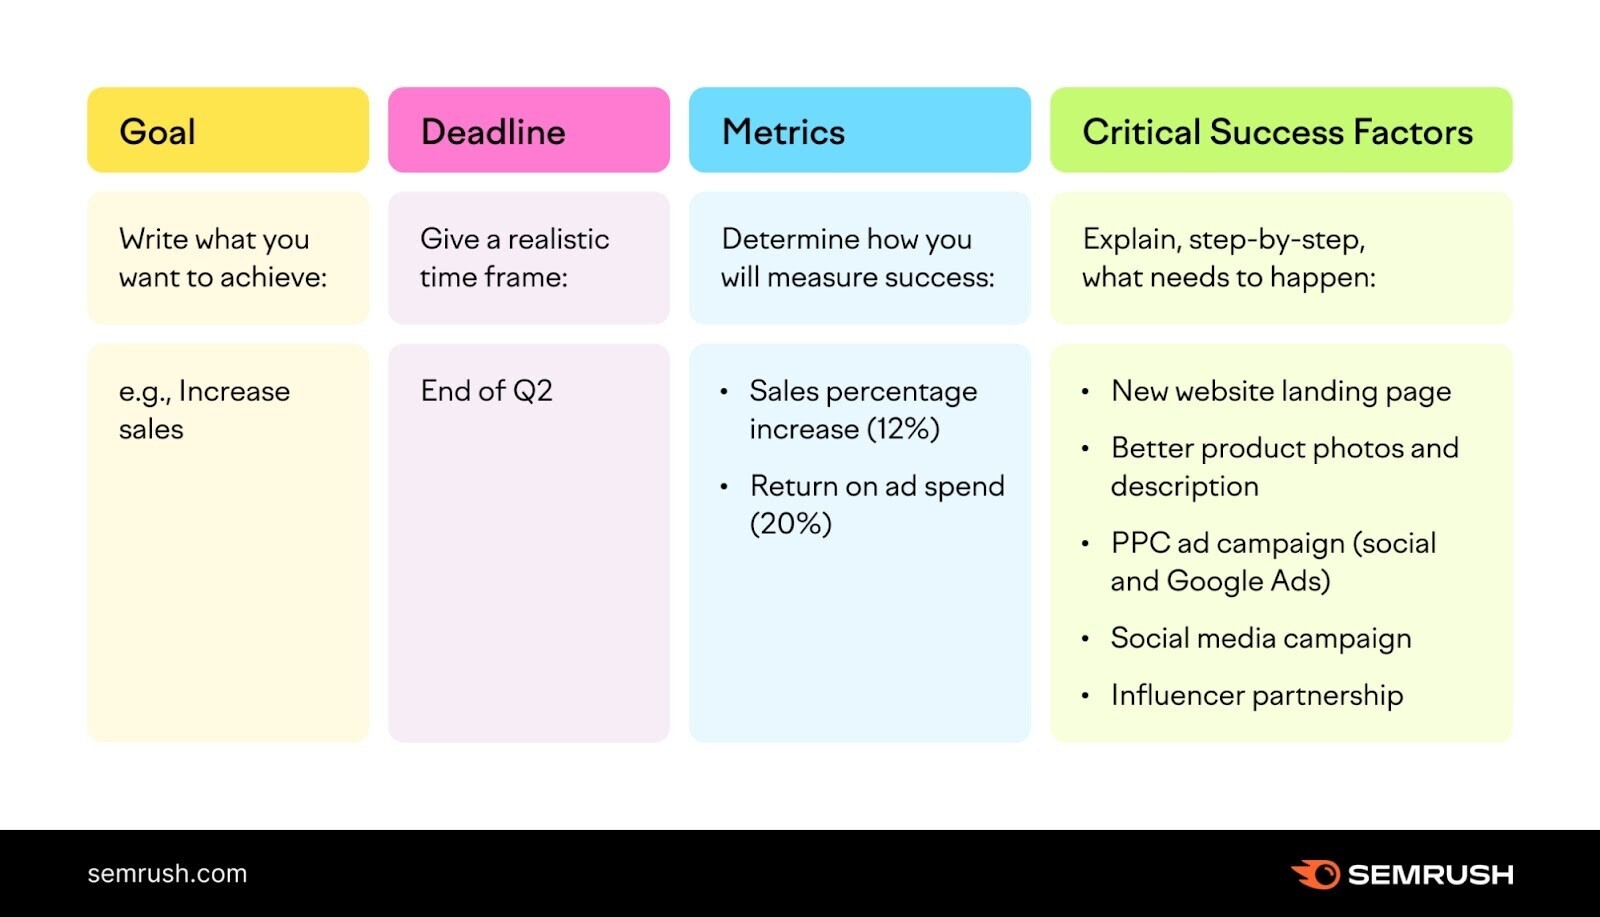 an infographic on "Goal, Deadline, Metrics and Critical Success Factors" columns